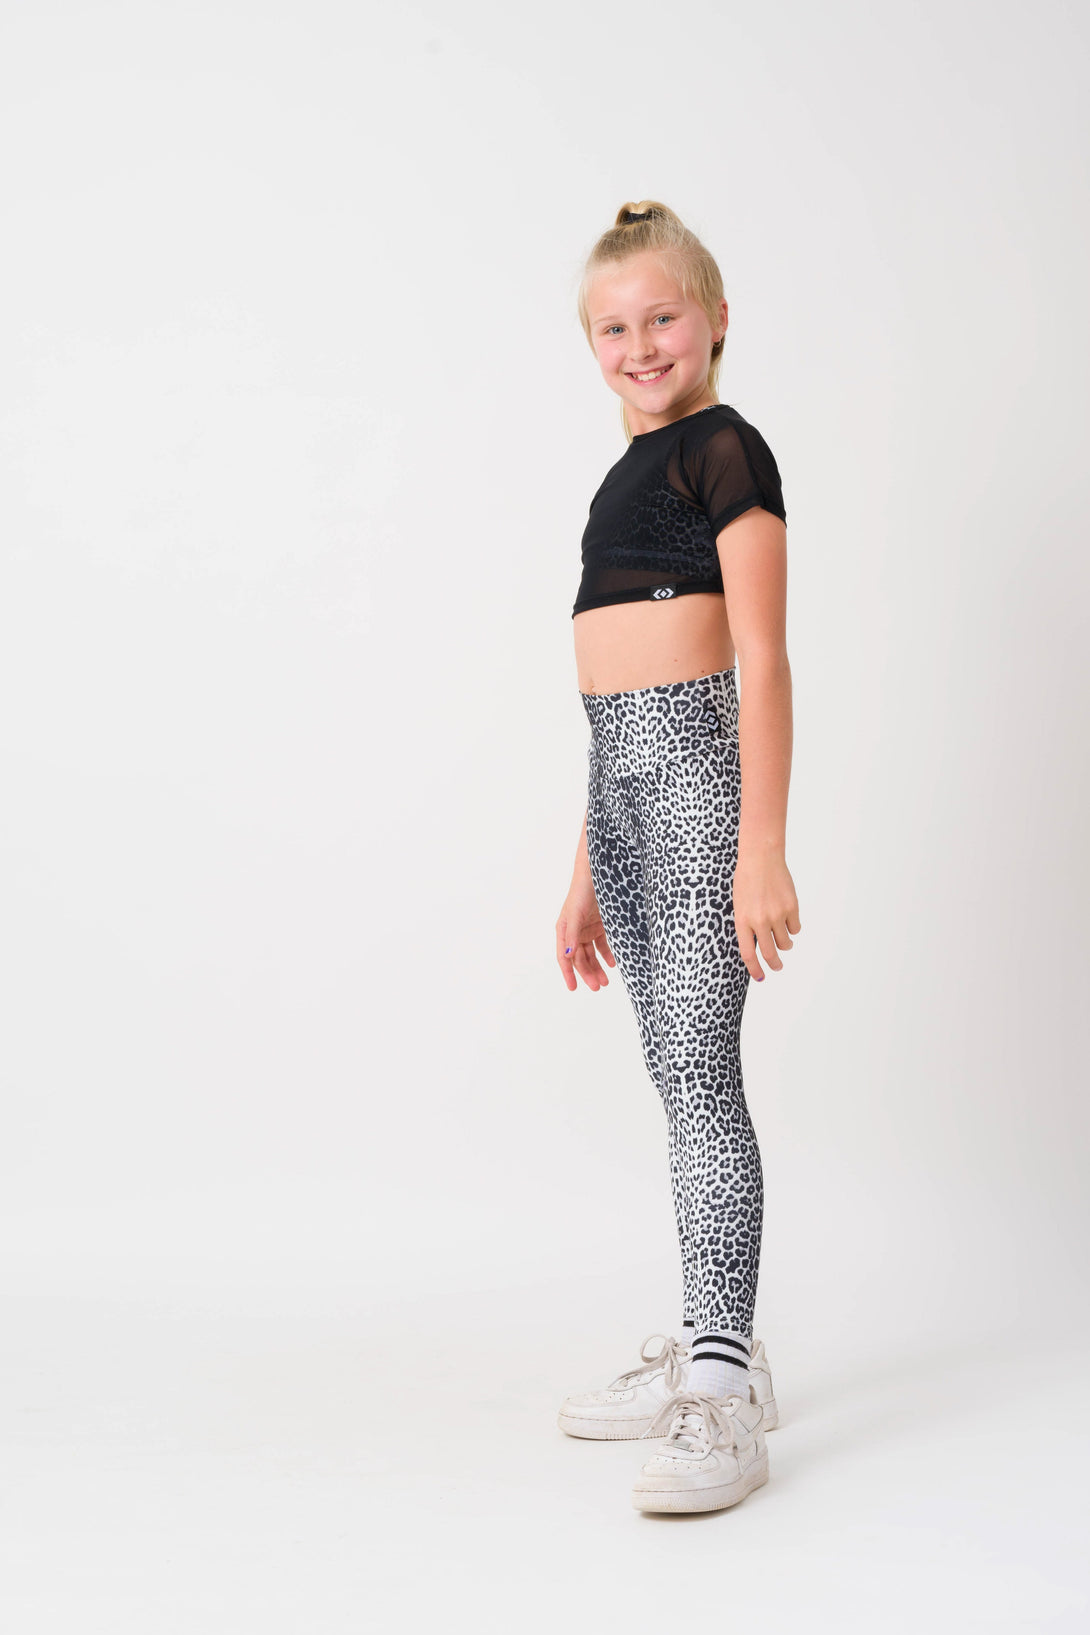 Jag Swag White Body Contouring - Kids Leggings-Activewear-Exoticathletica